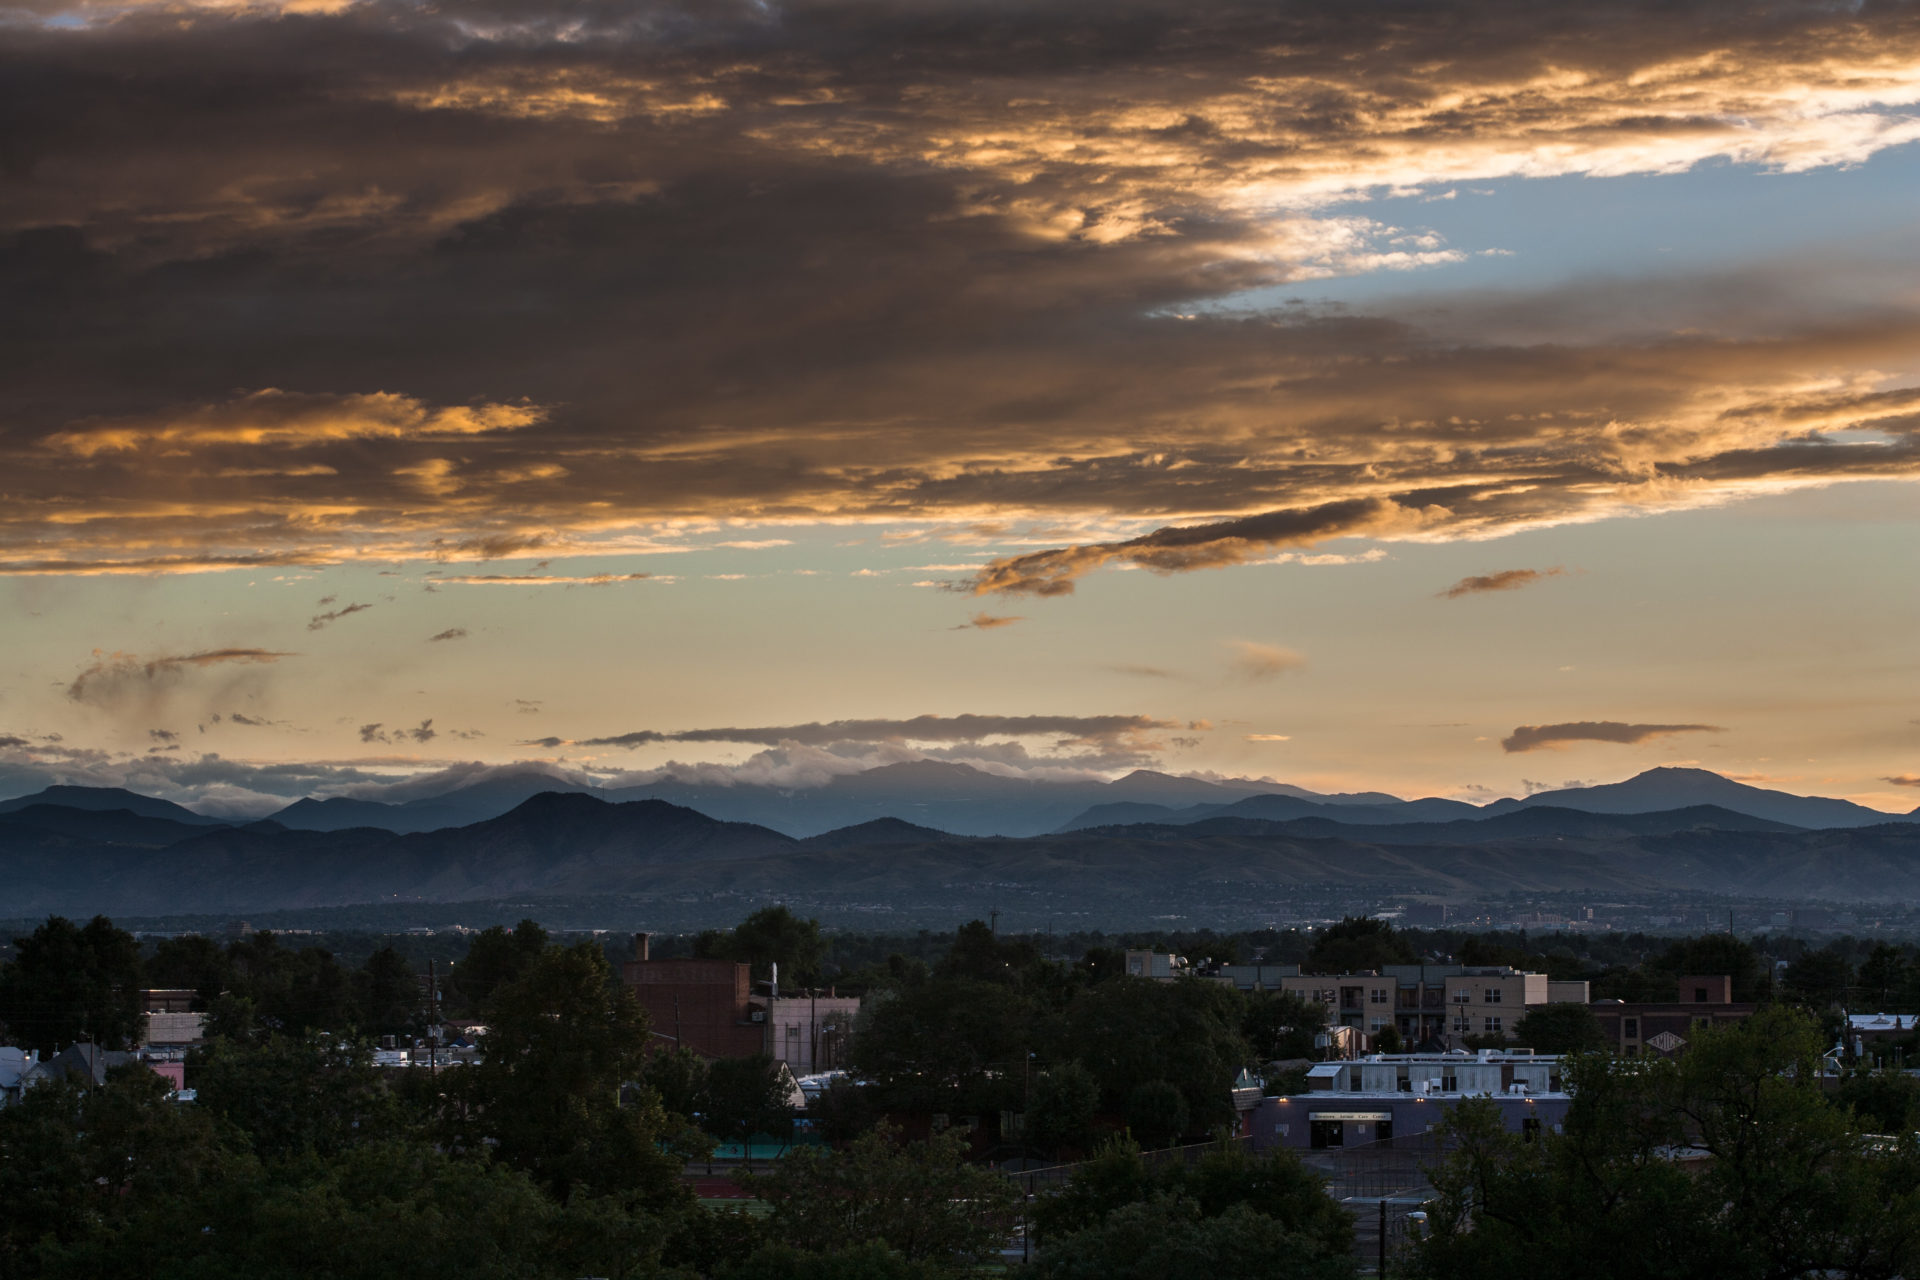 Mount Evans sunset - August 4, 2011